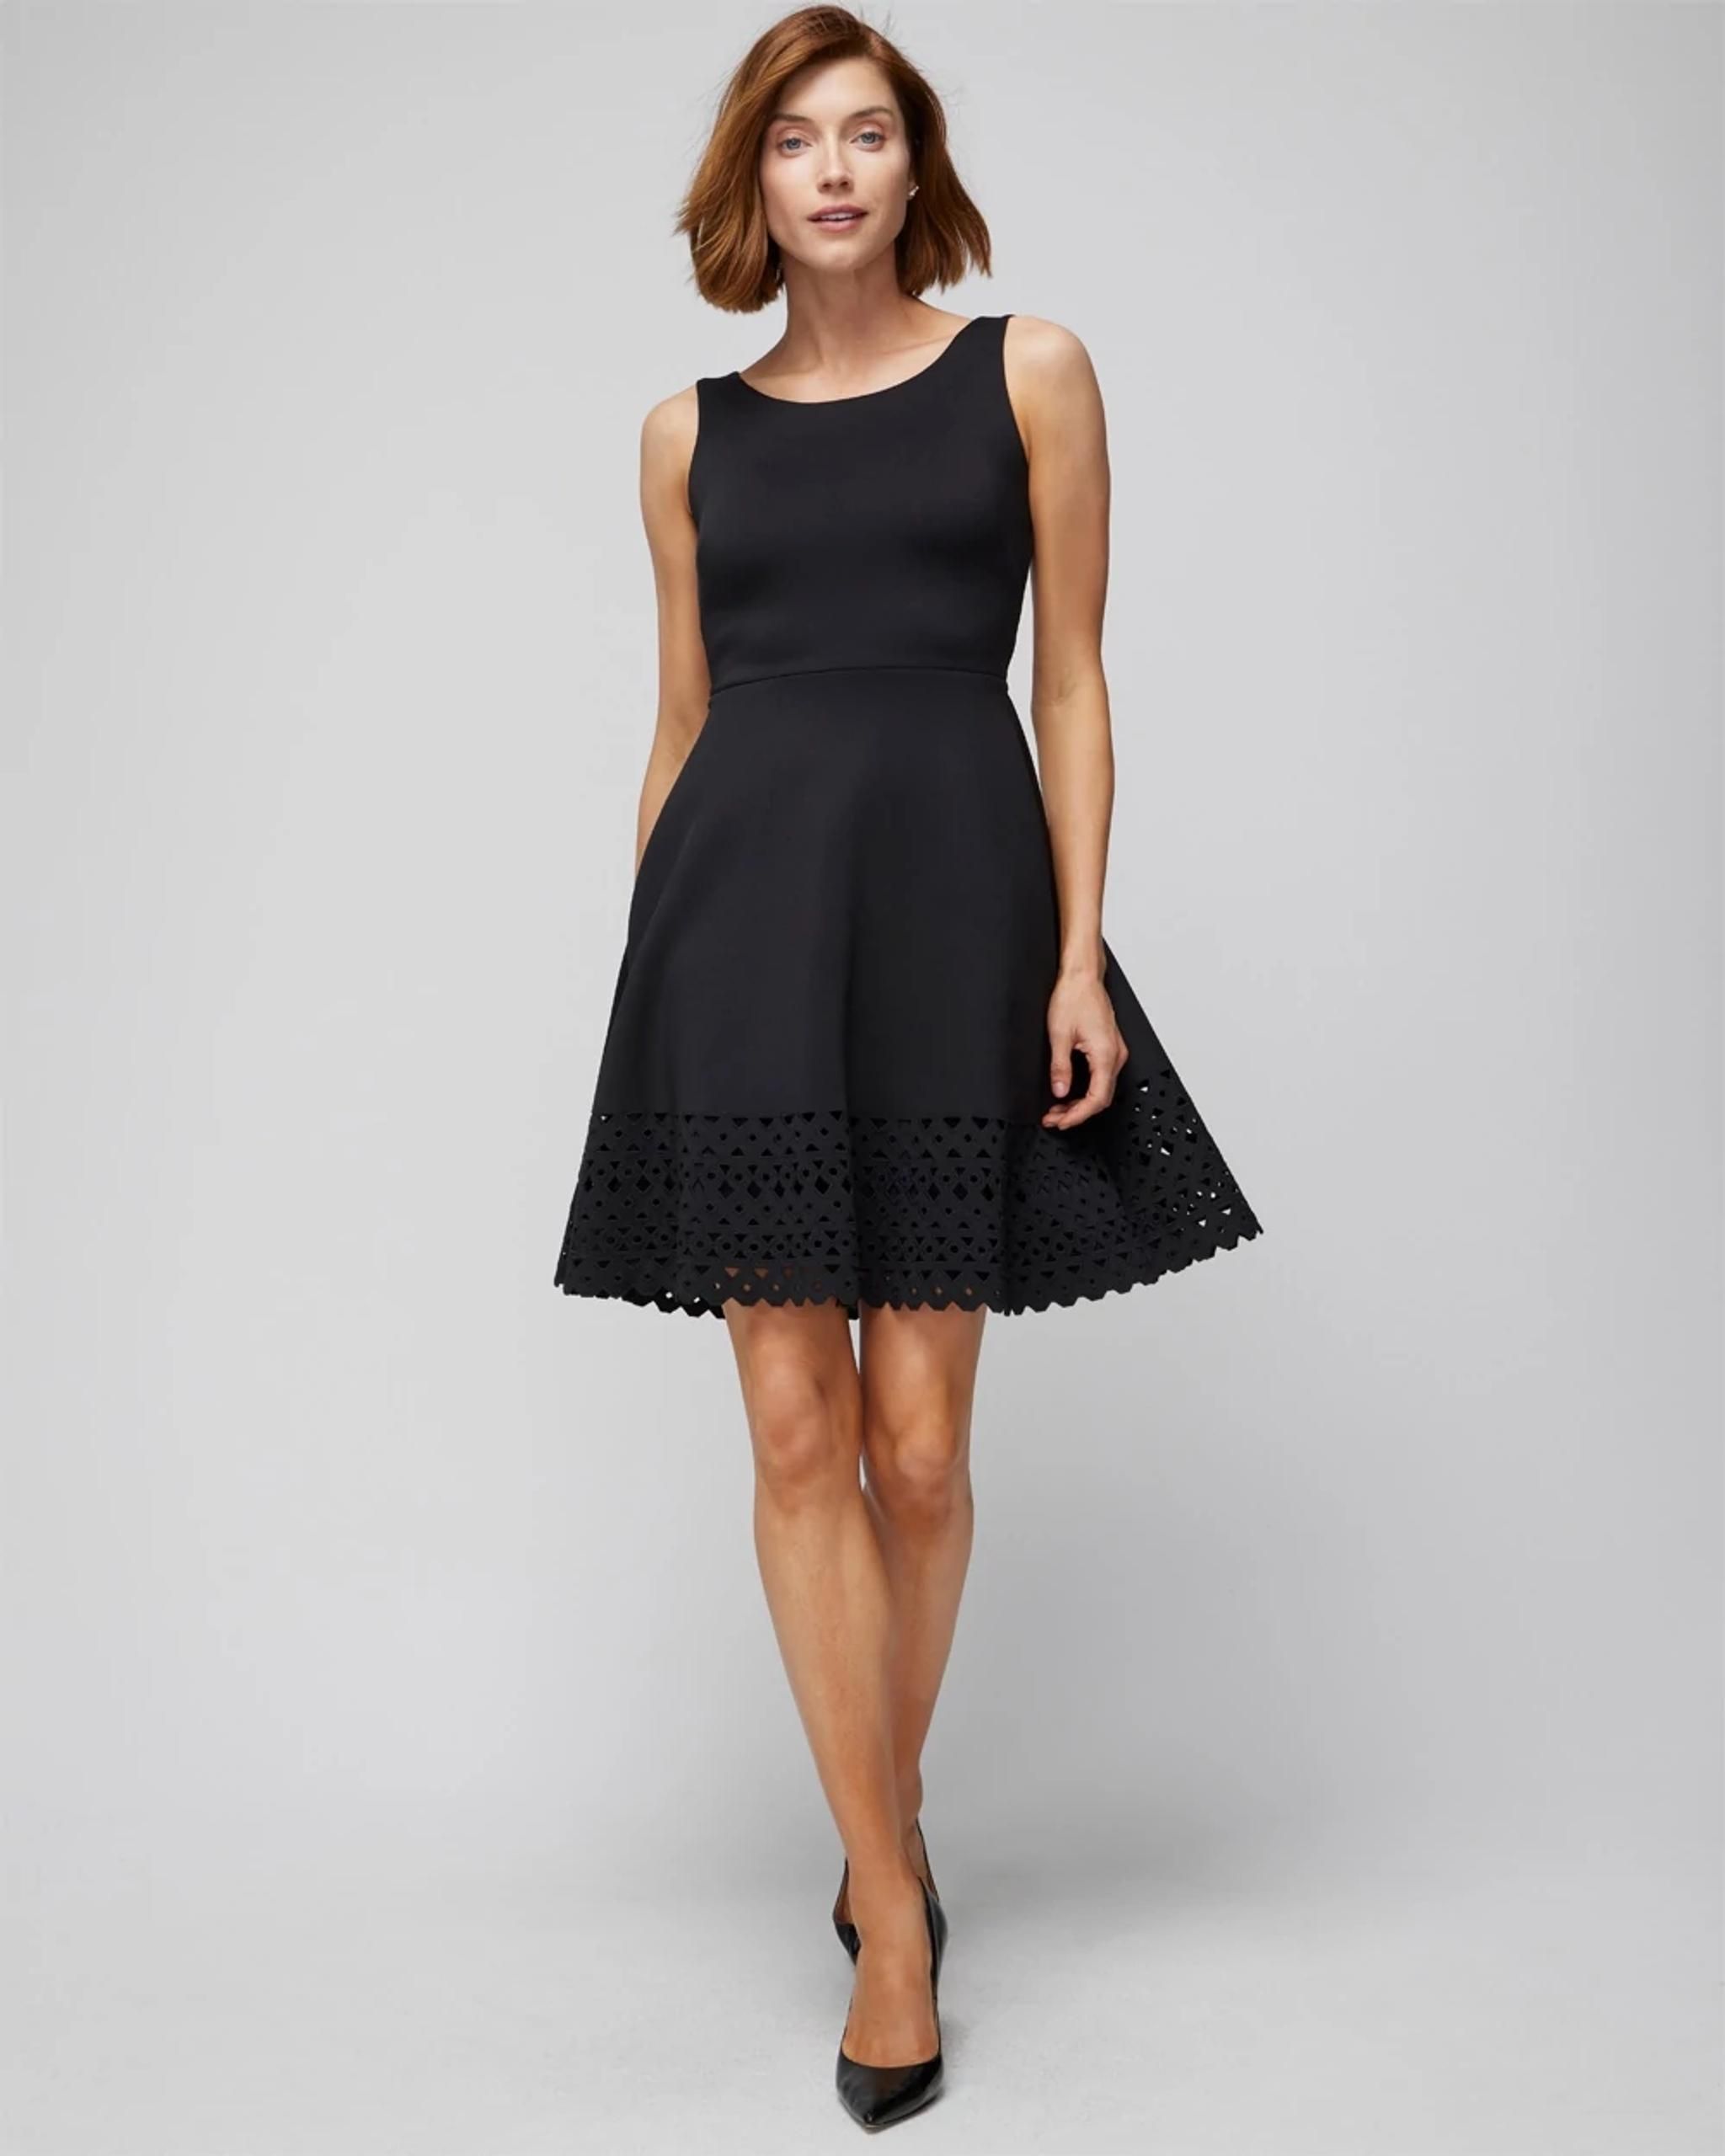 Sleeveless Scuba Fit-and-Flare Dress | White House Black Market